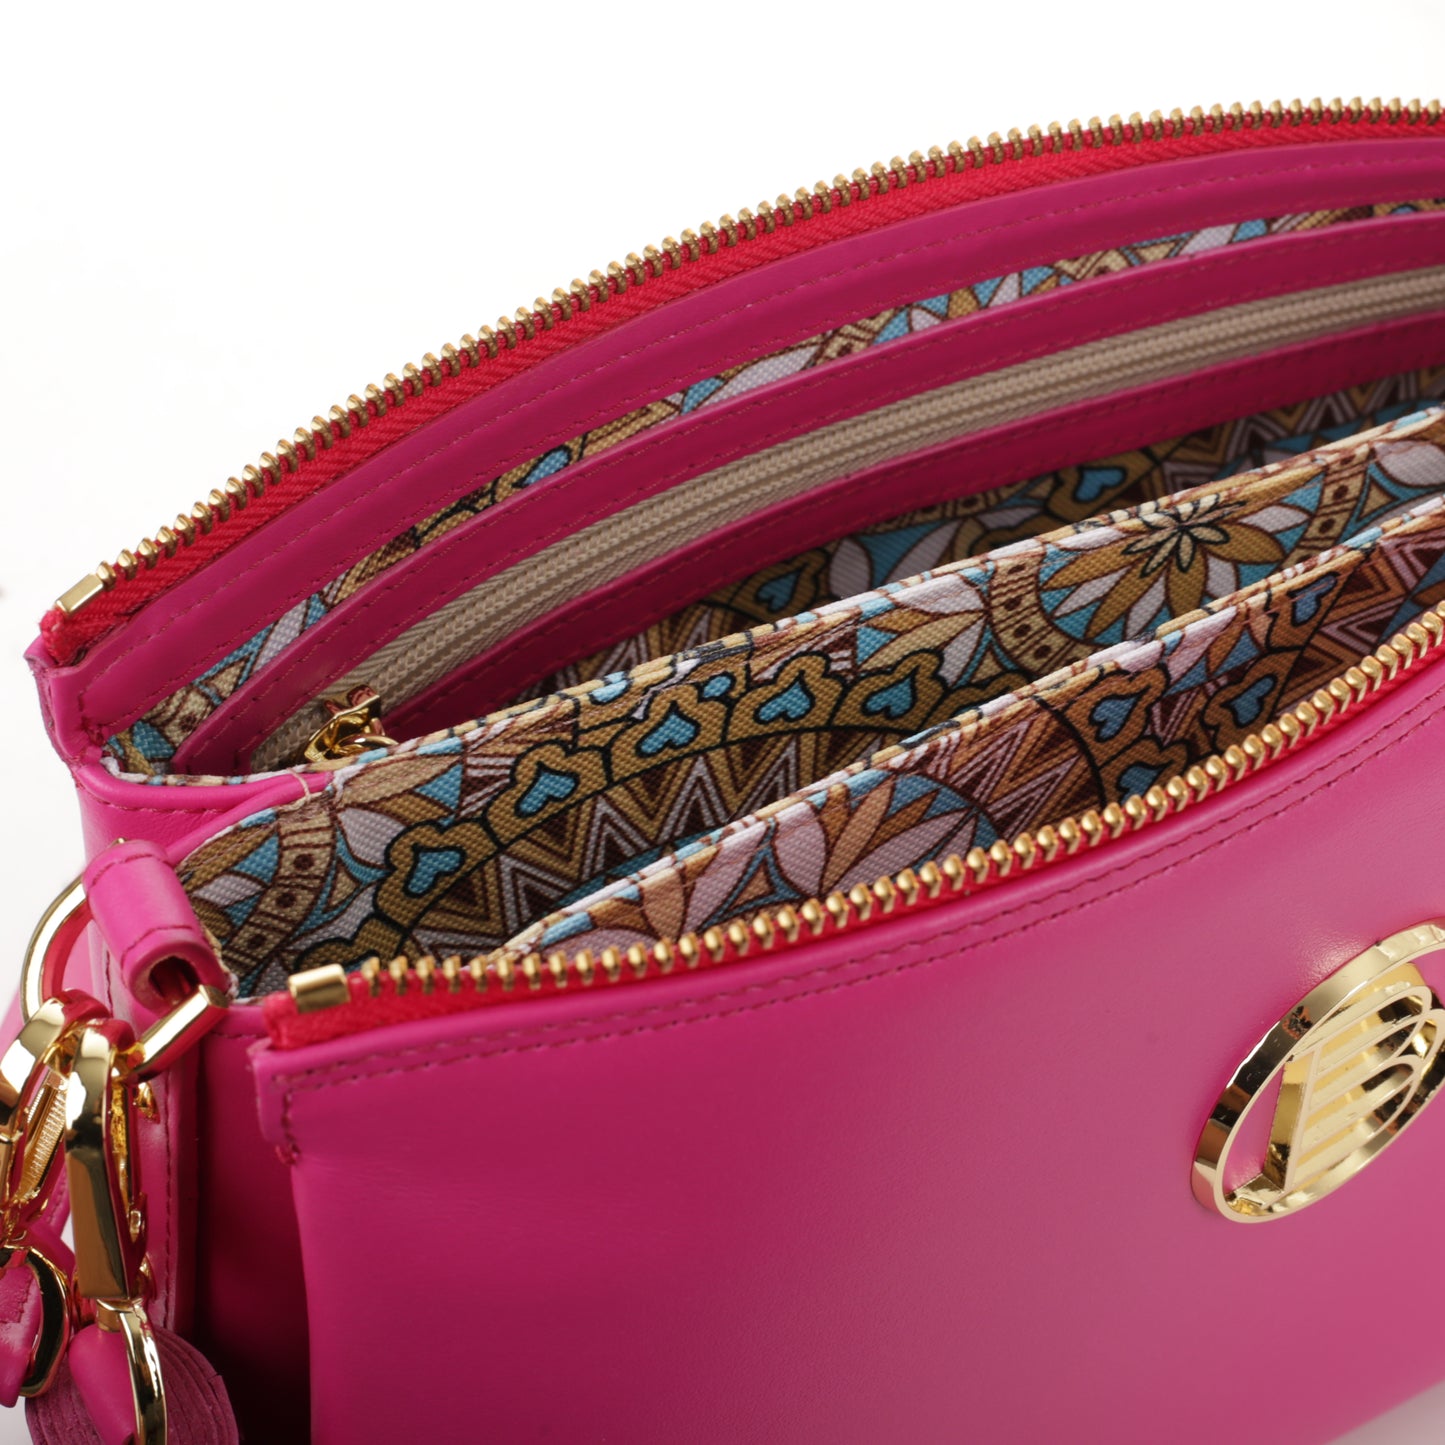 ELISE NAPA FUCHSIA women's leather handbag